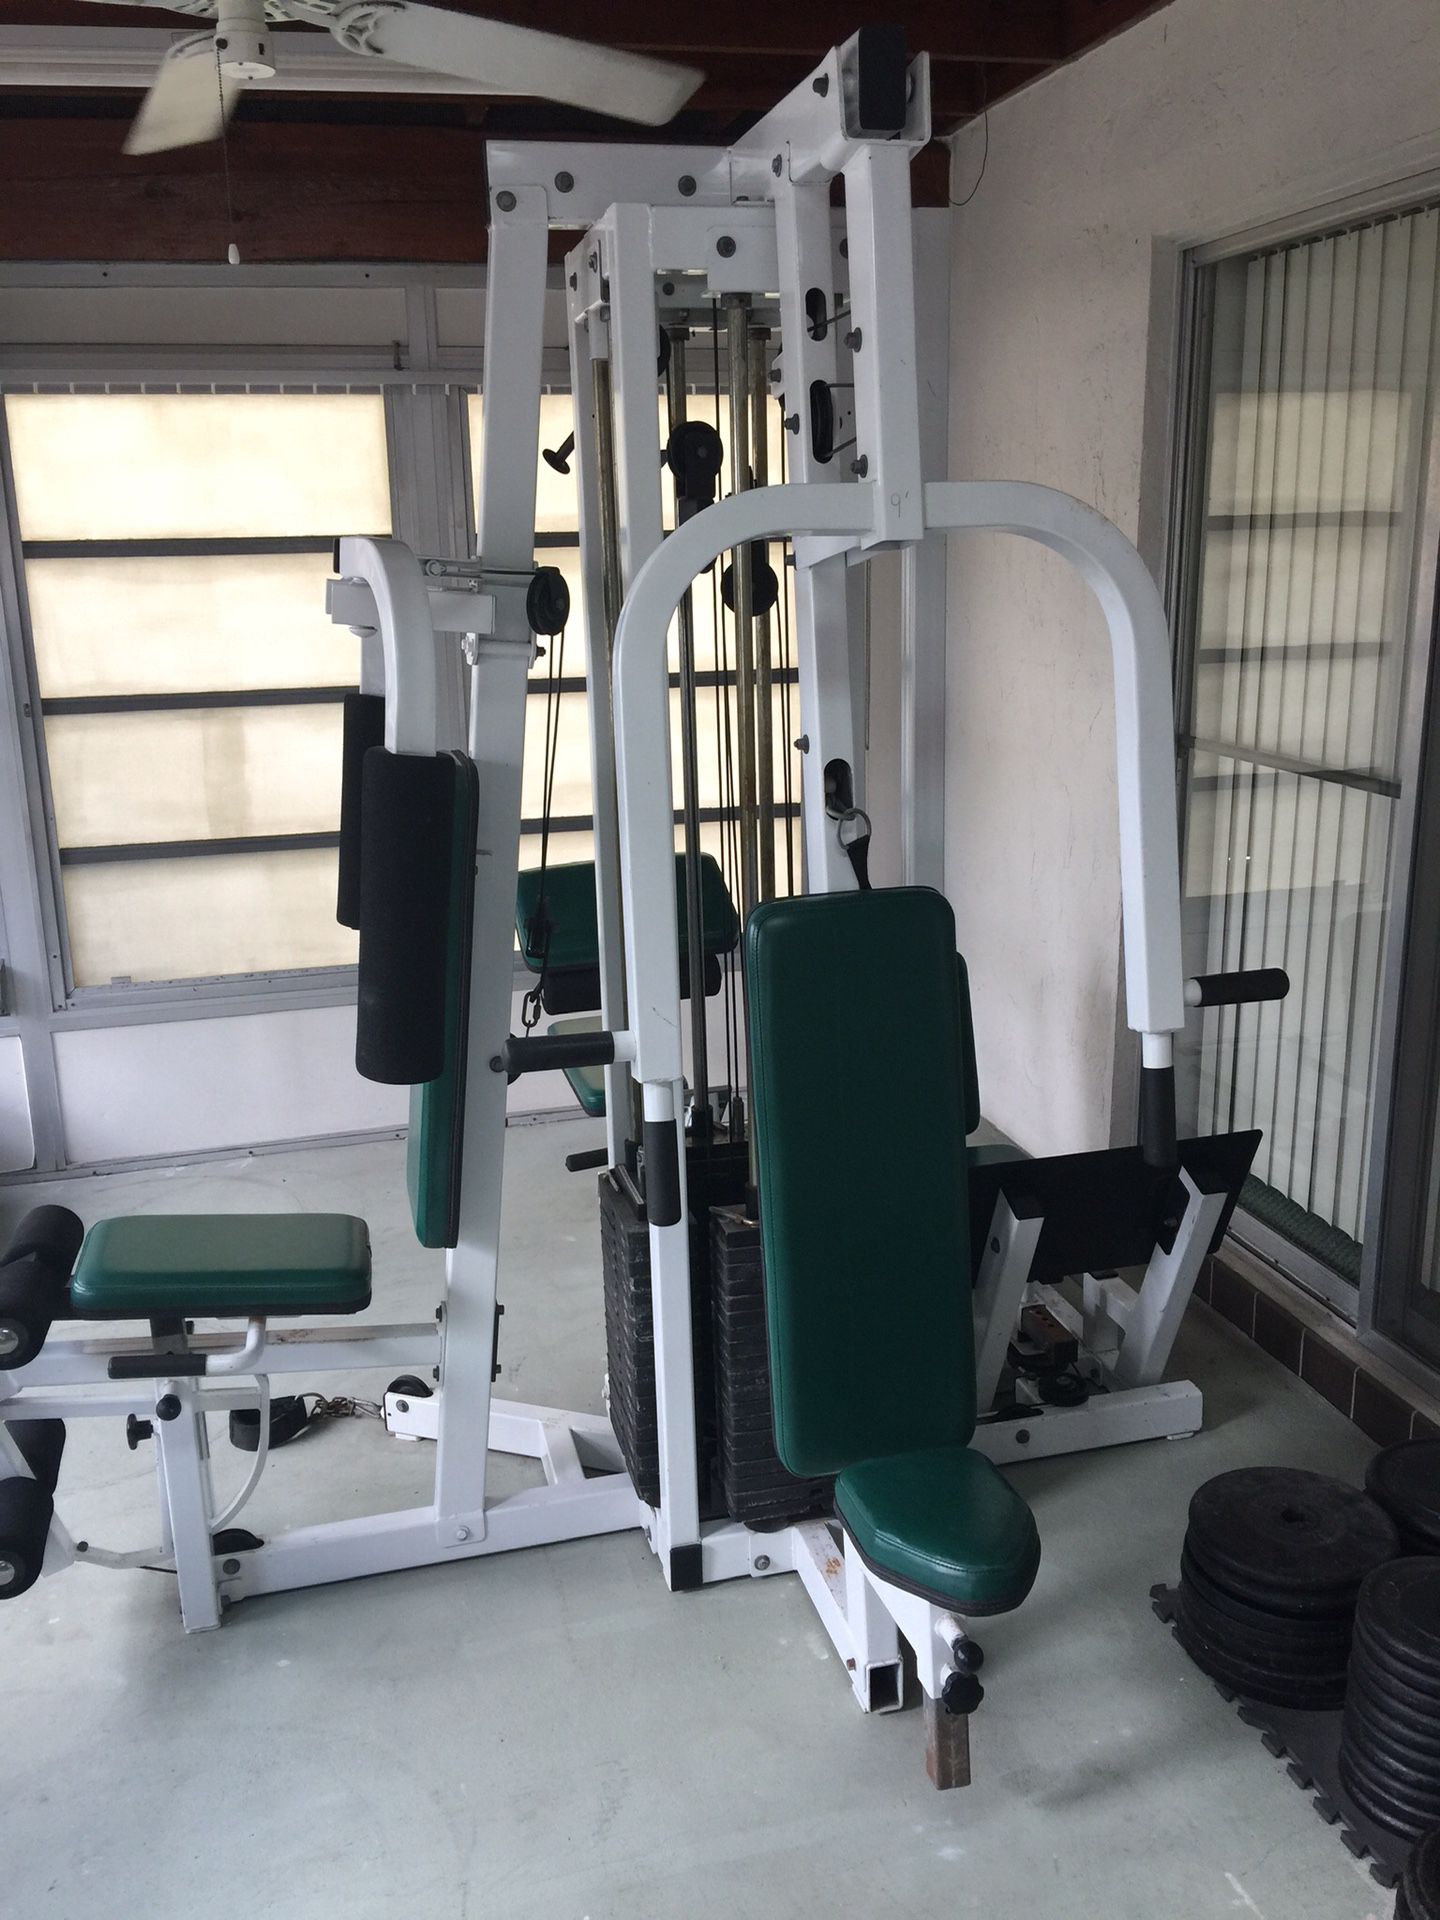 Exercise equipment universal gym machine (OCALA)